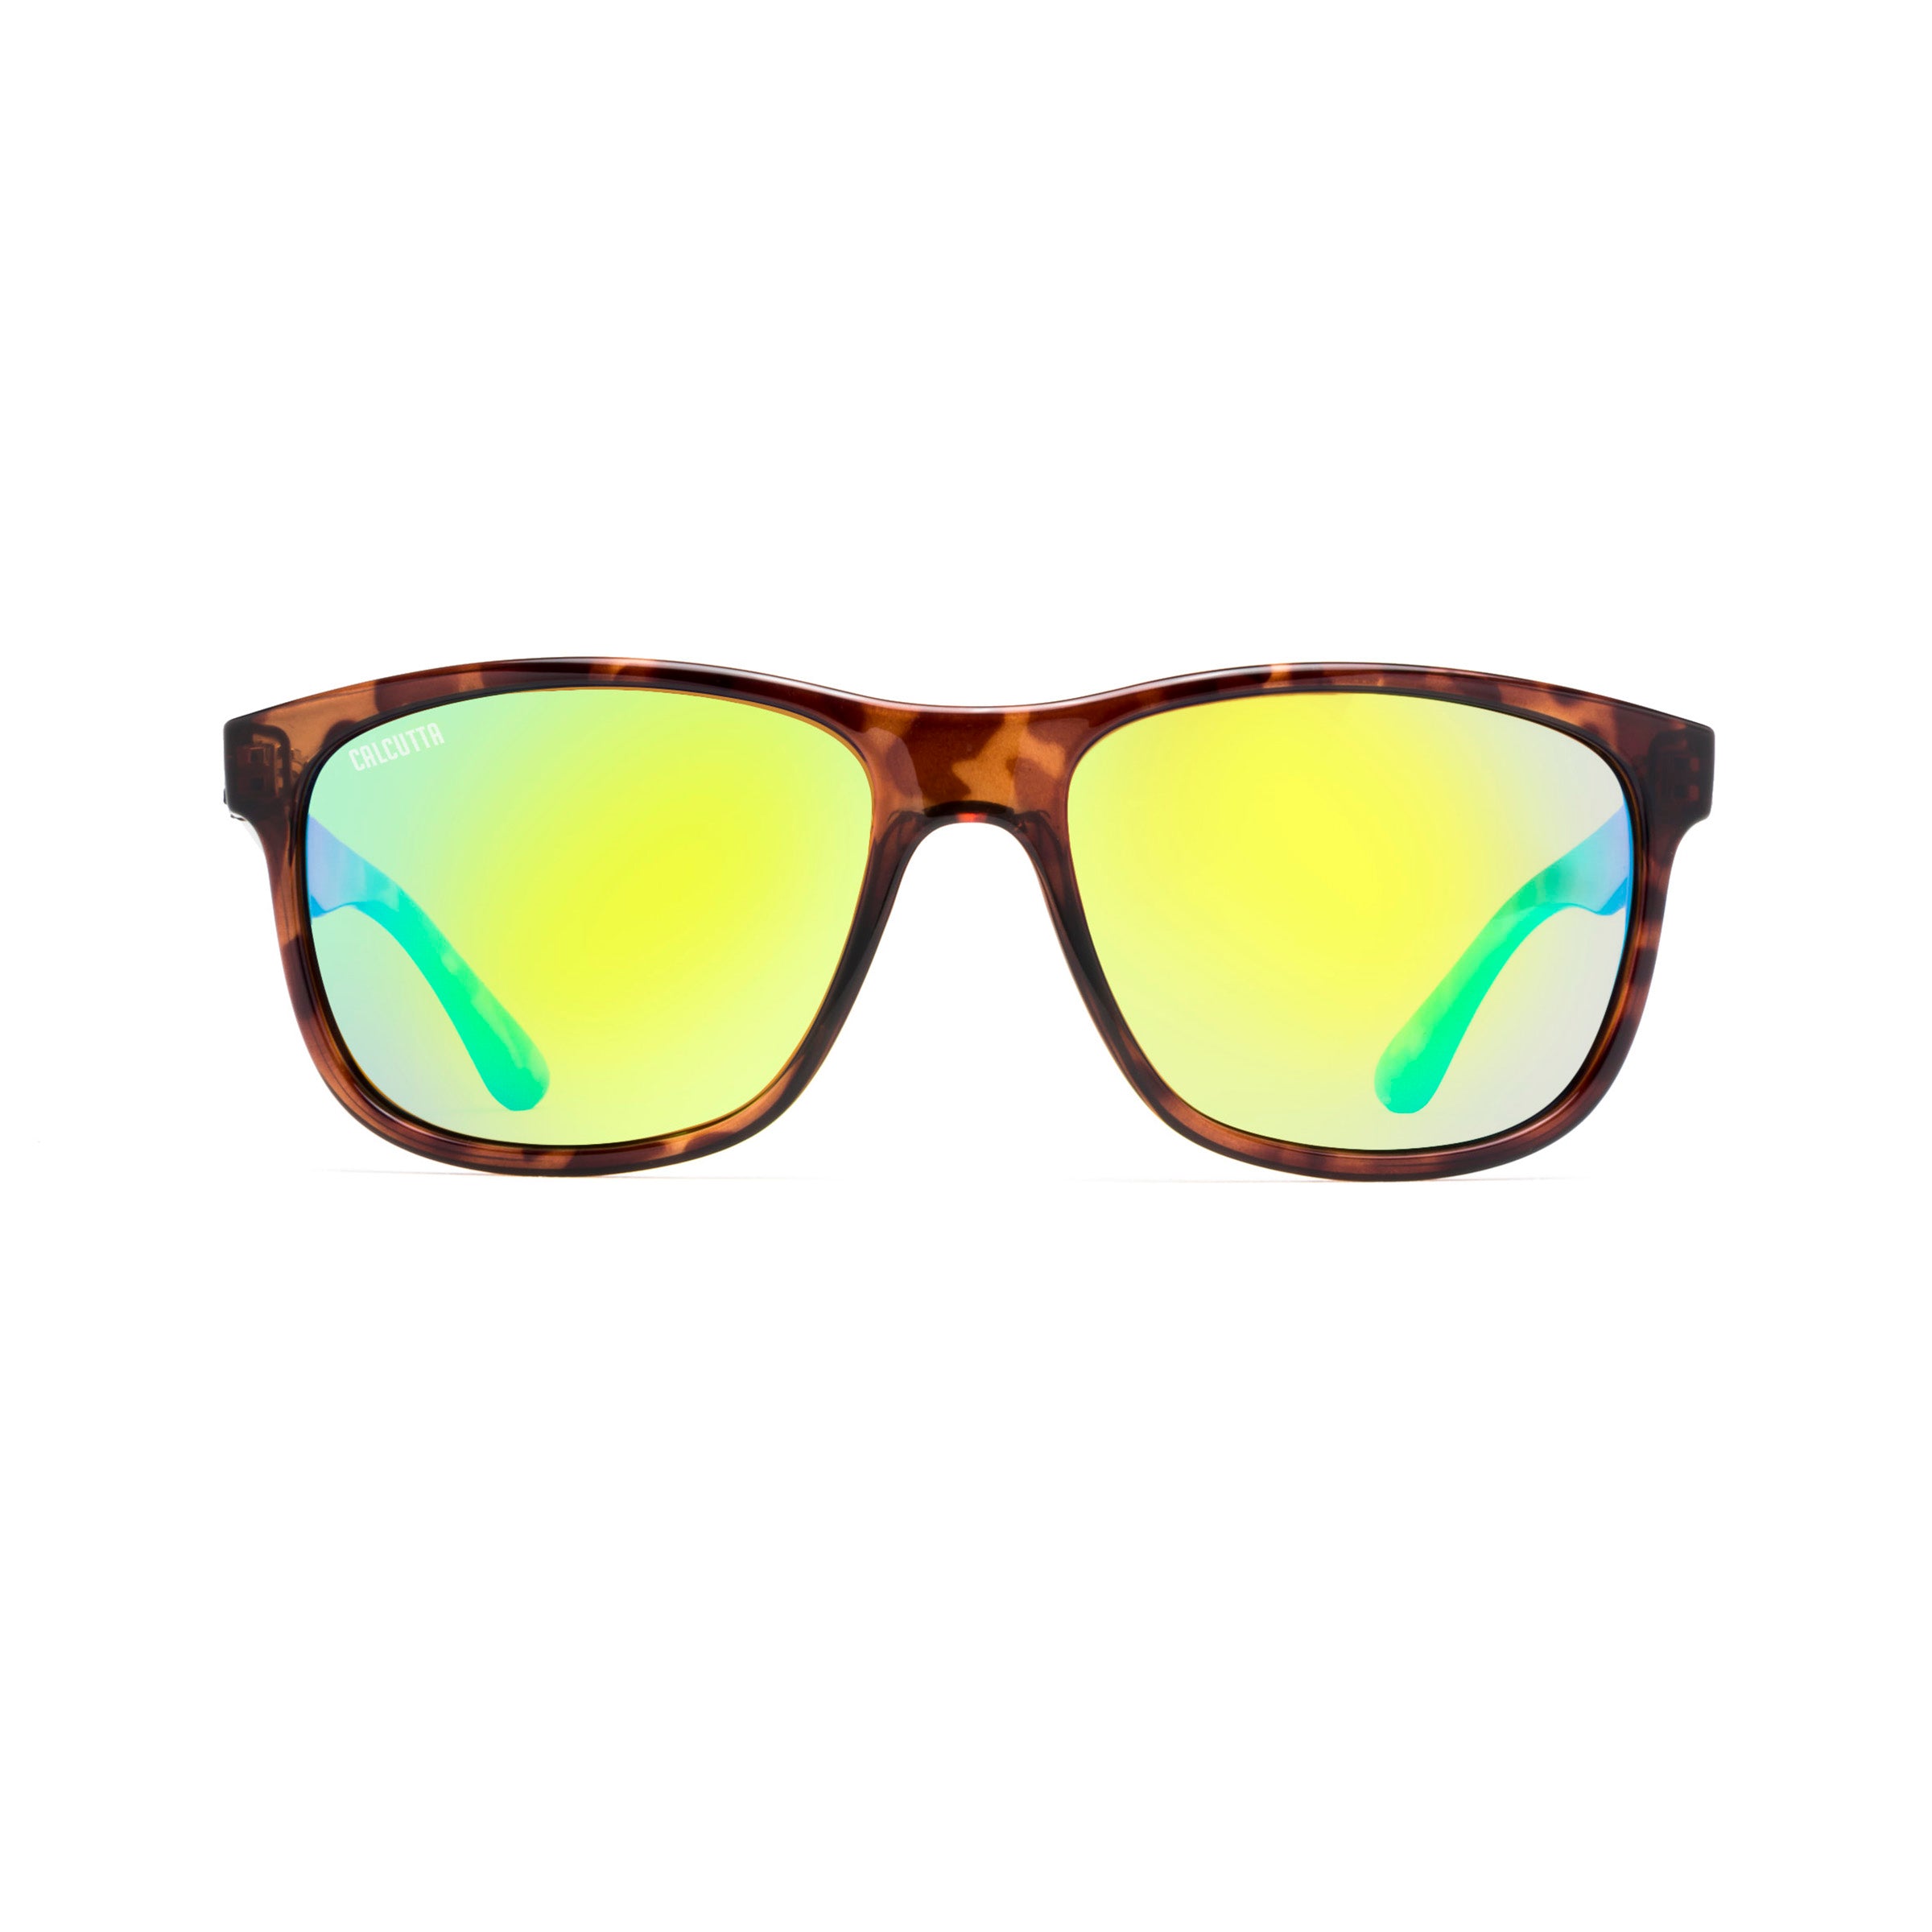 Shop Online Okuma Polarized Sunglasses Type-A Gray Lens - Marine Hub